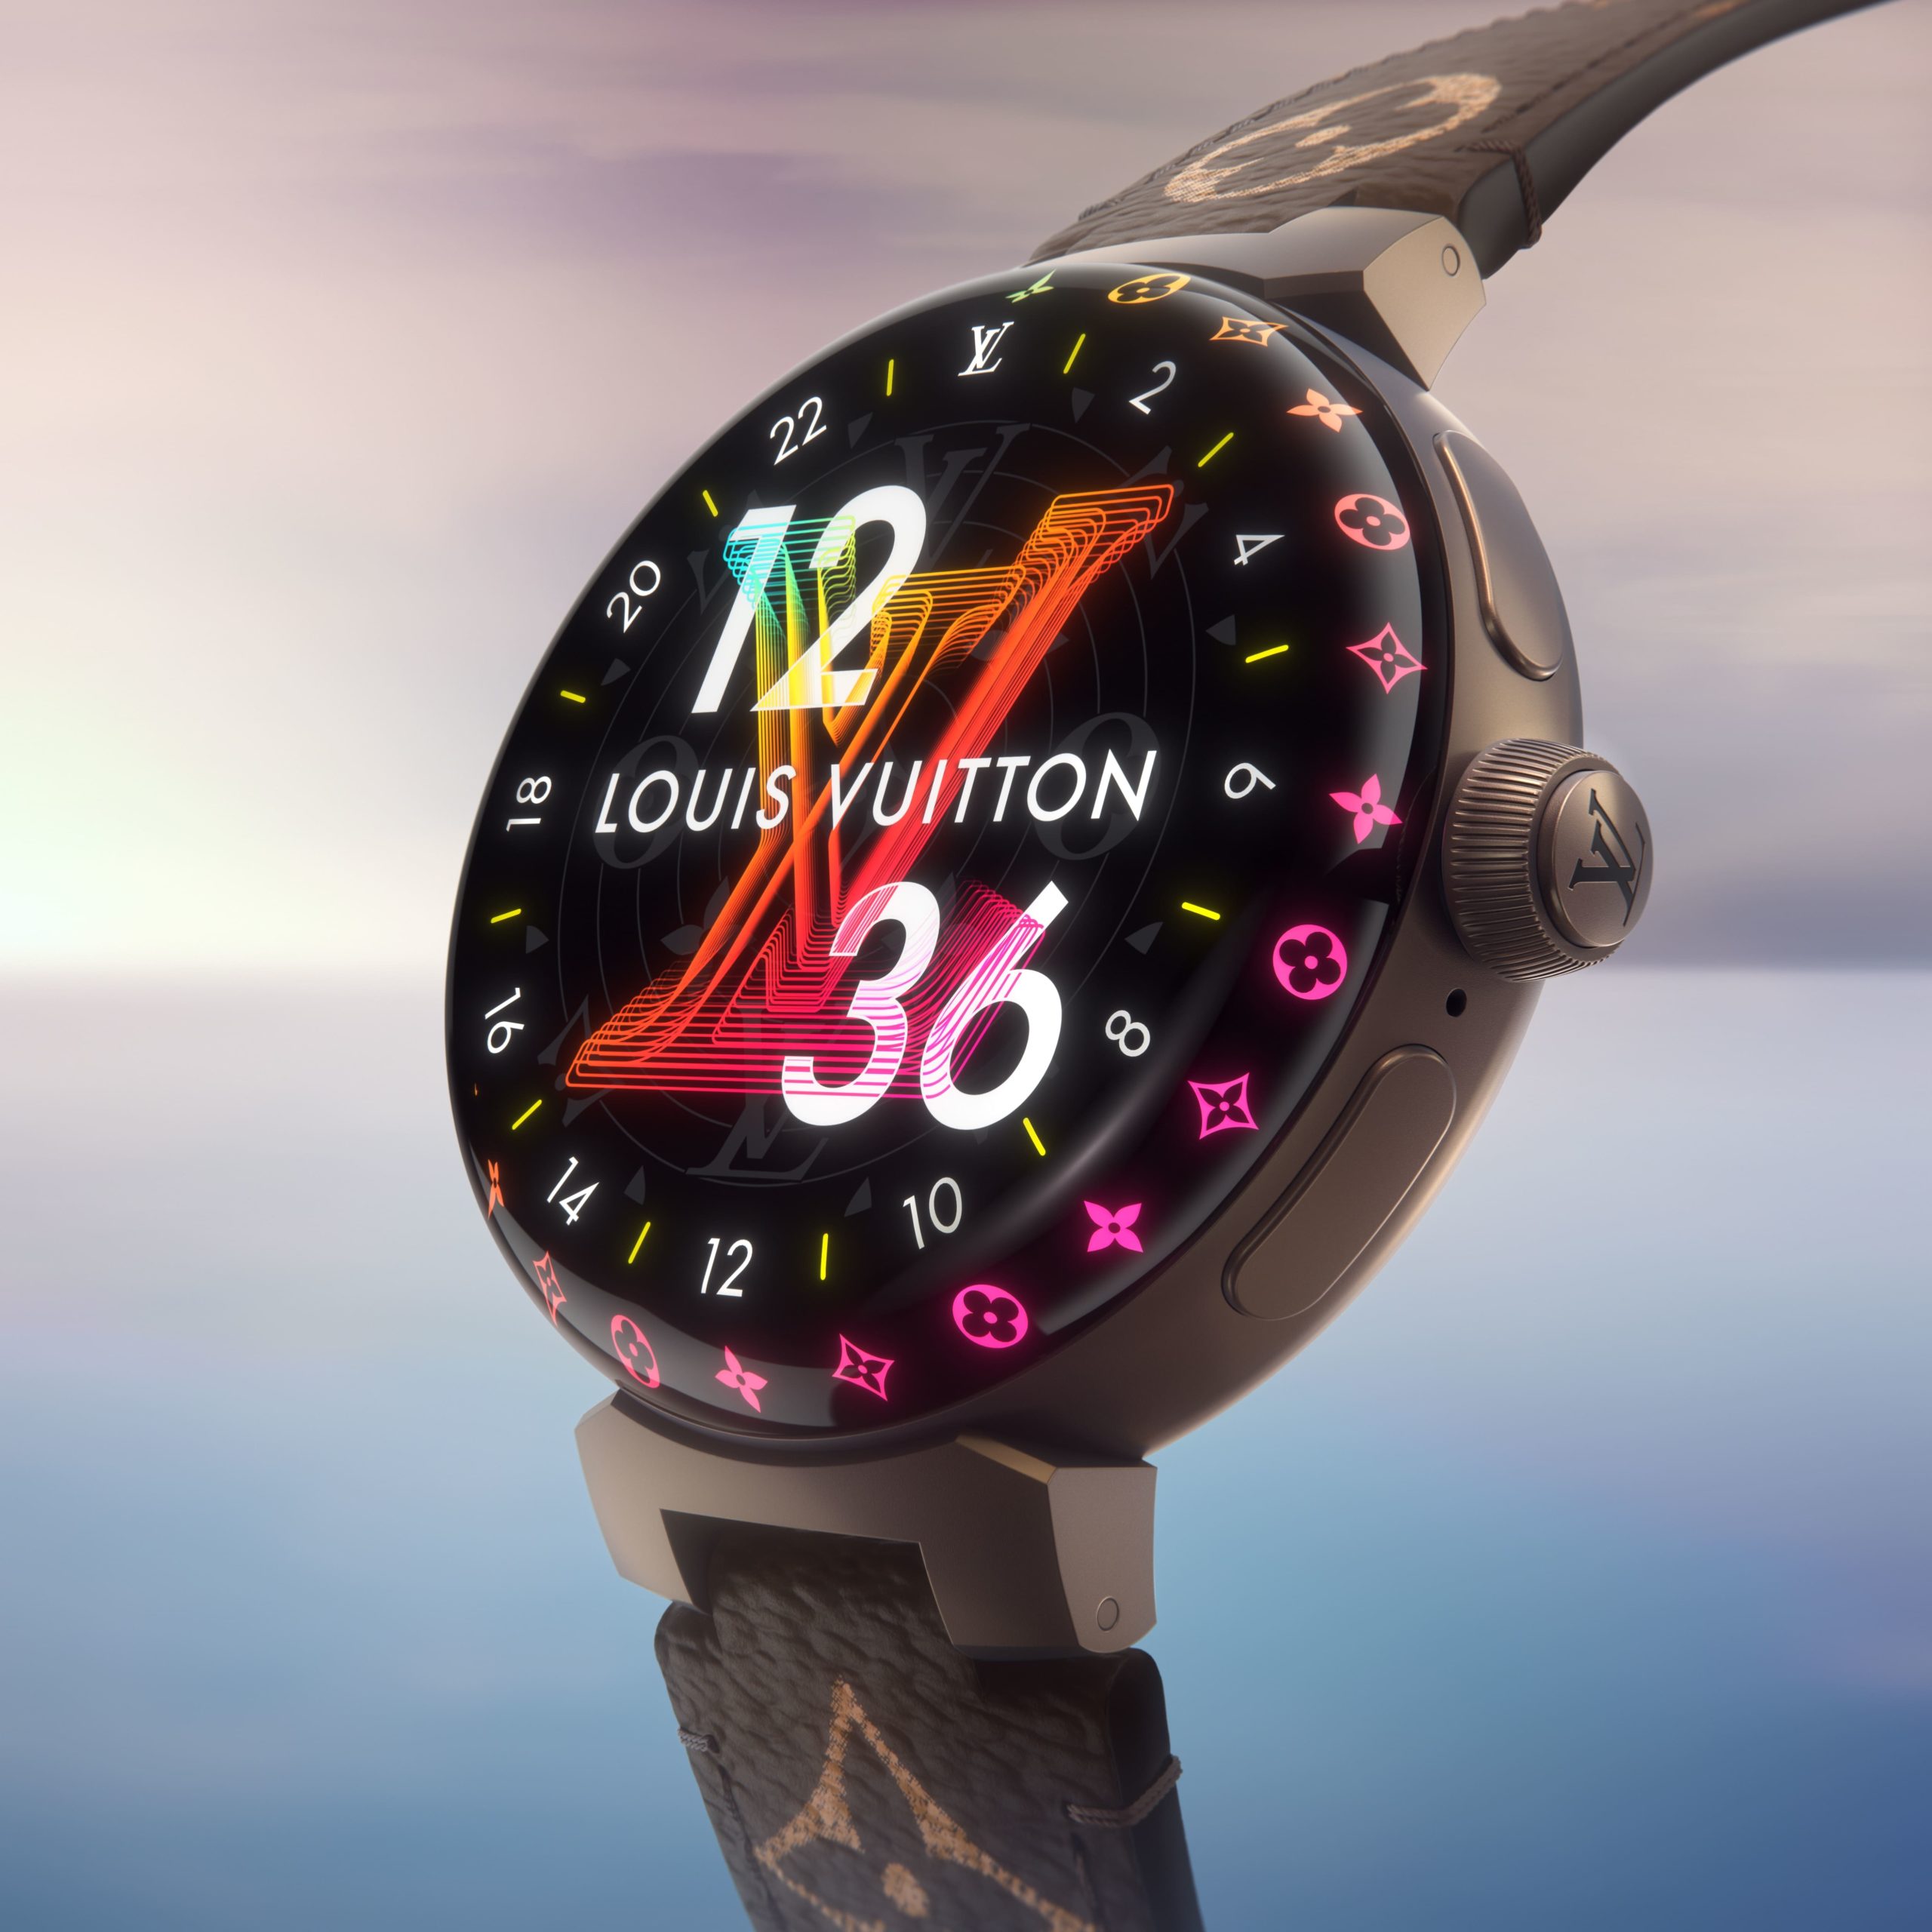 Louis Vuitton new smartwatch Tambour Horizon Light Up 2022 1